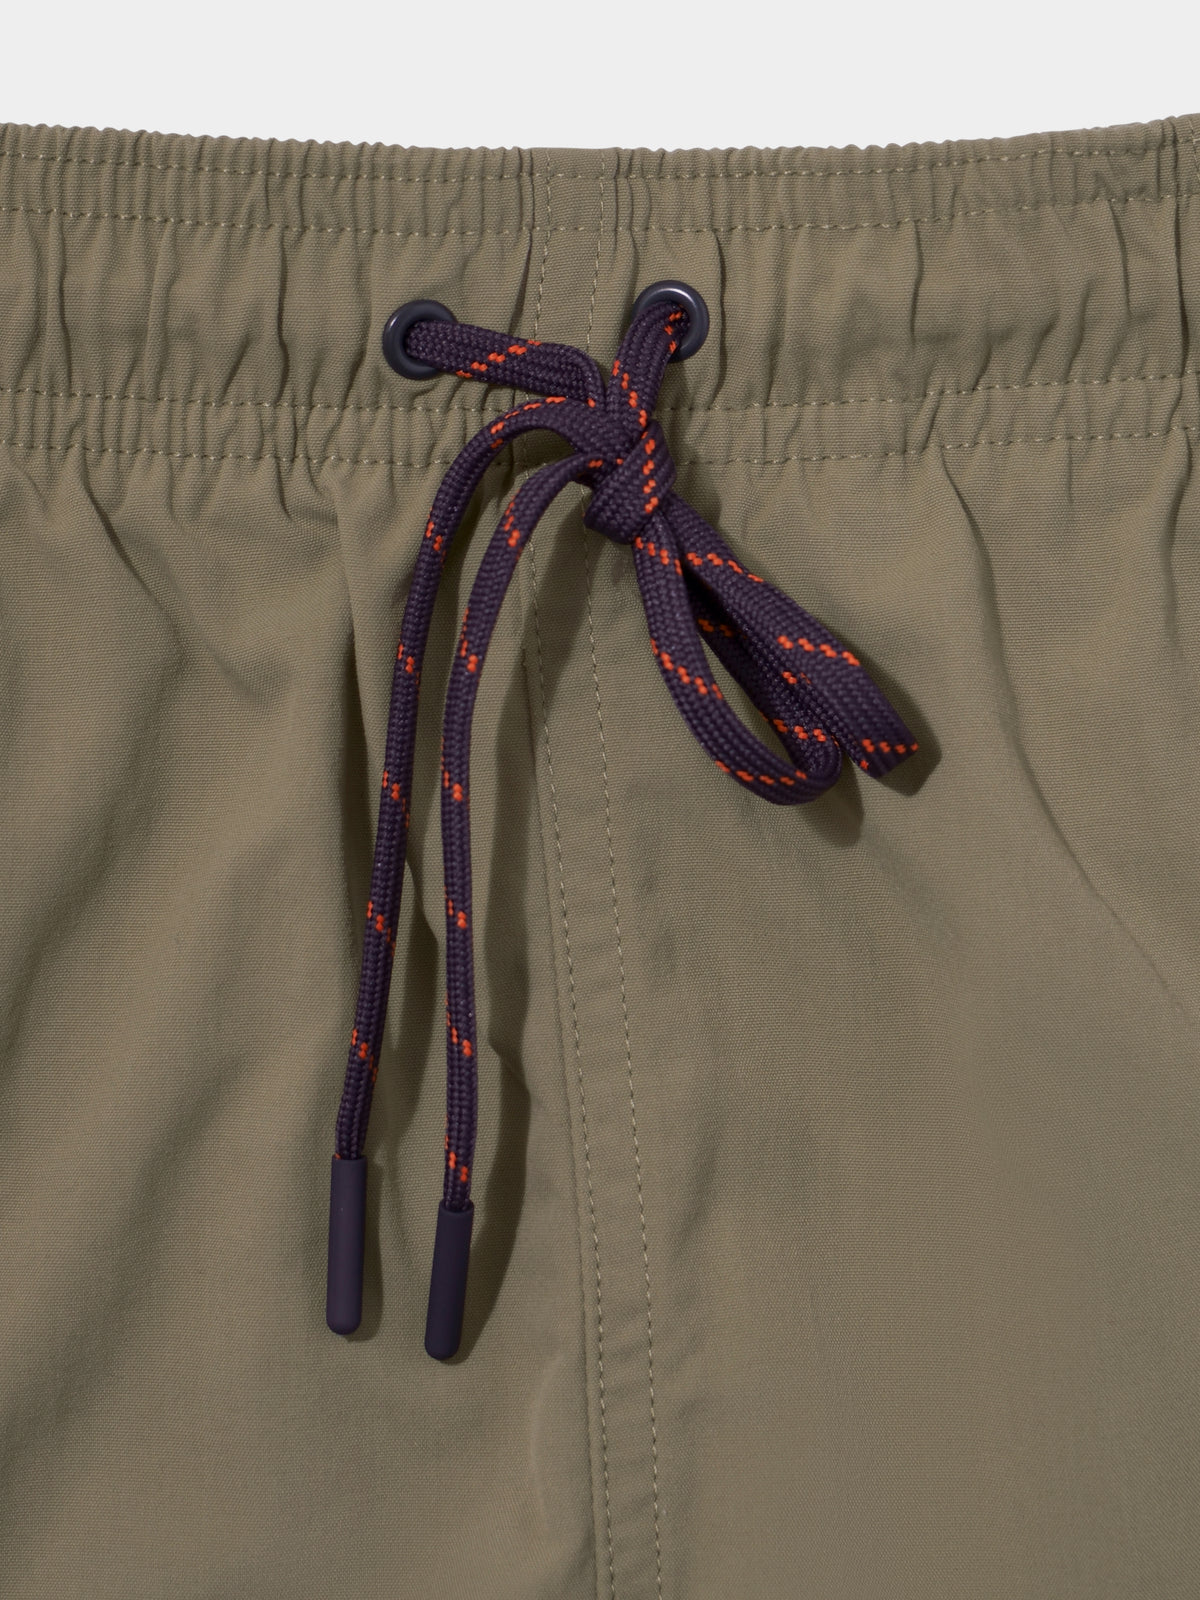 Women's Scout Shorts 2.5" - Sagebrush